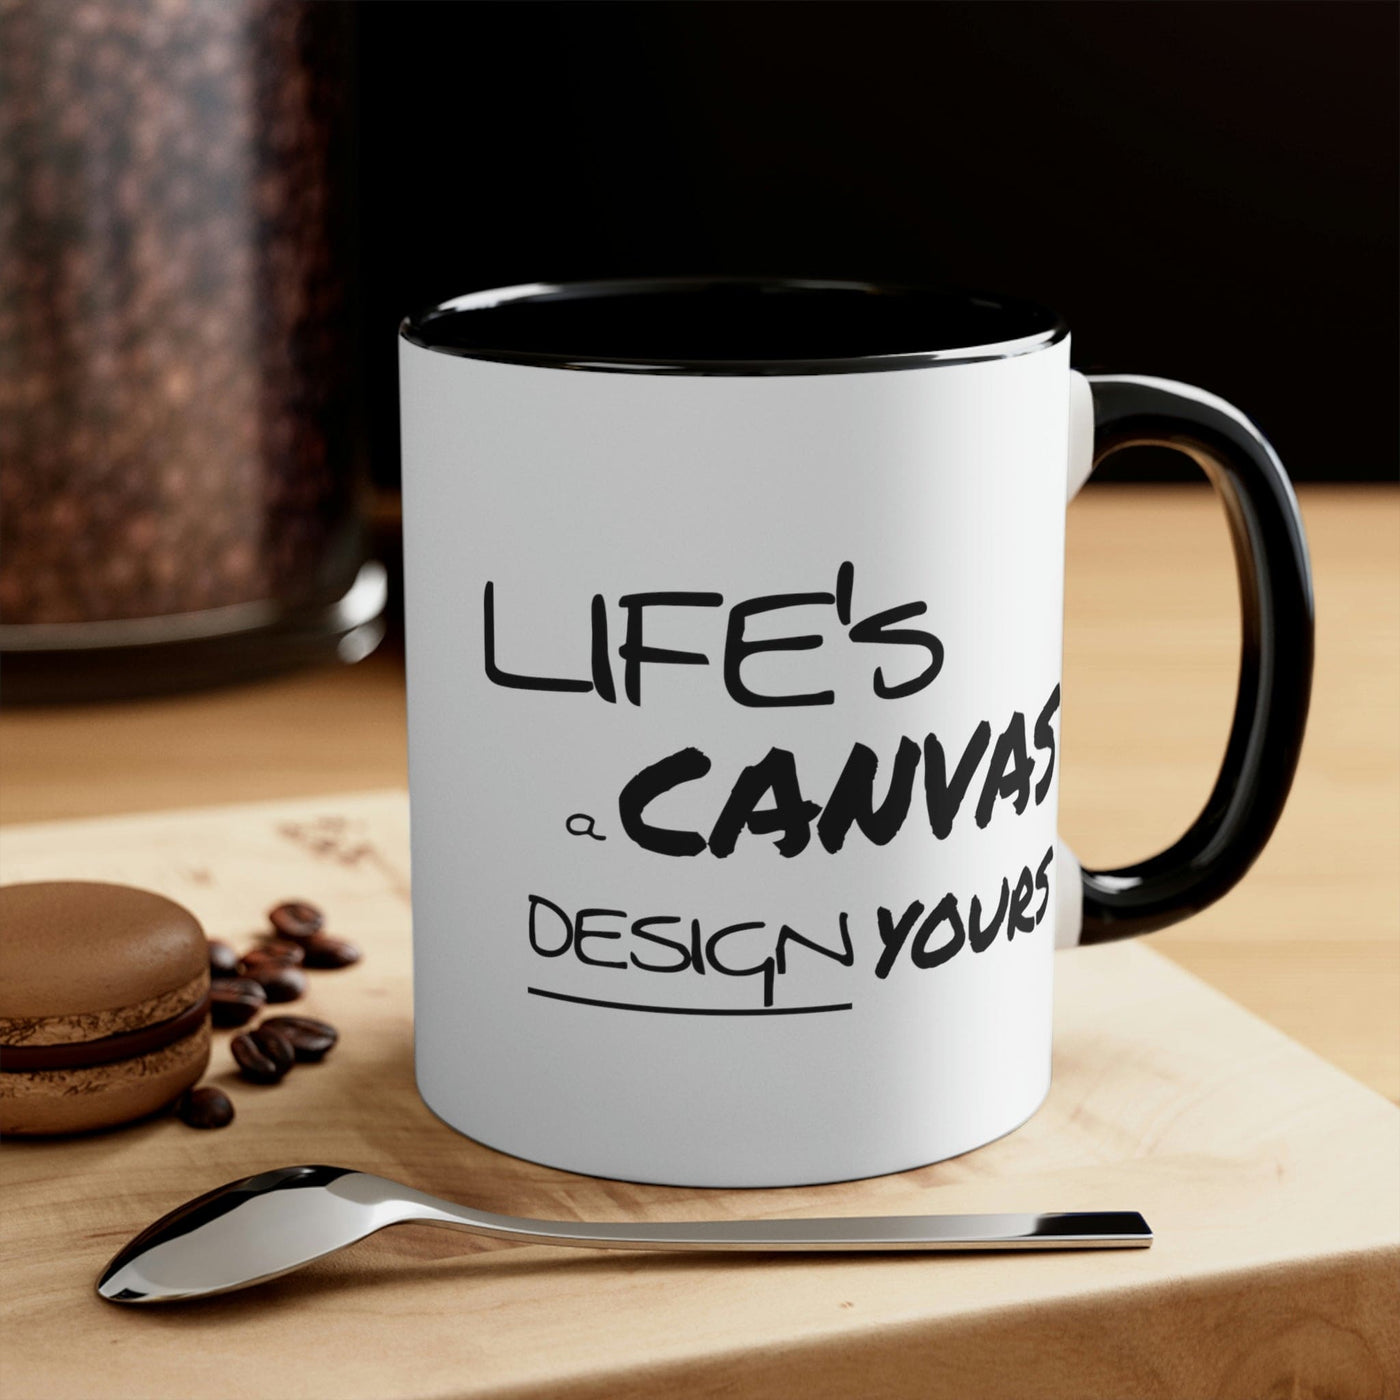 Two-tone Accent Ceramic Mug 11oz Life’s a Canvas Design Yours Motivational